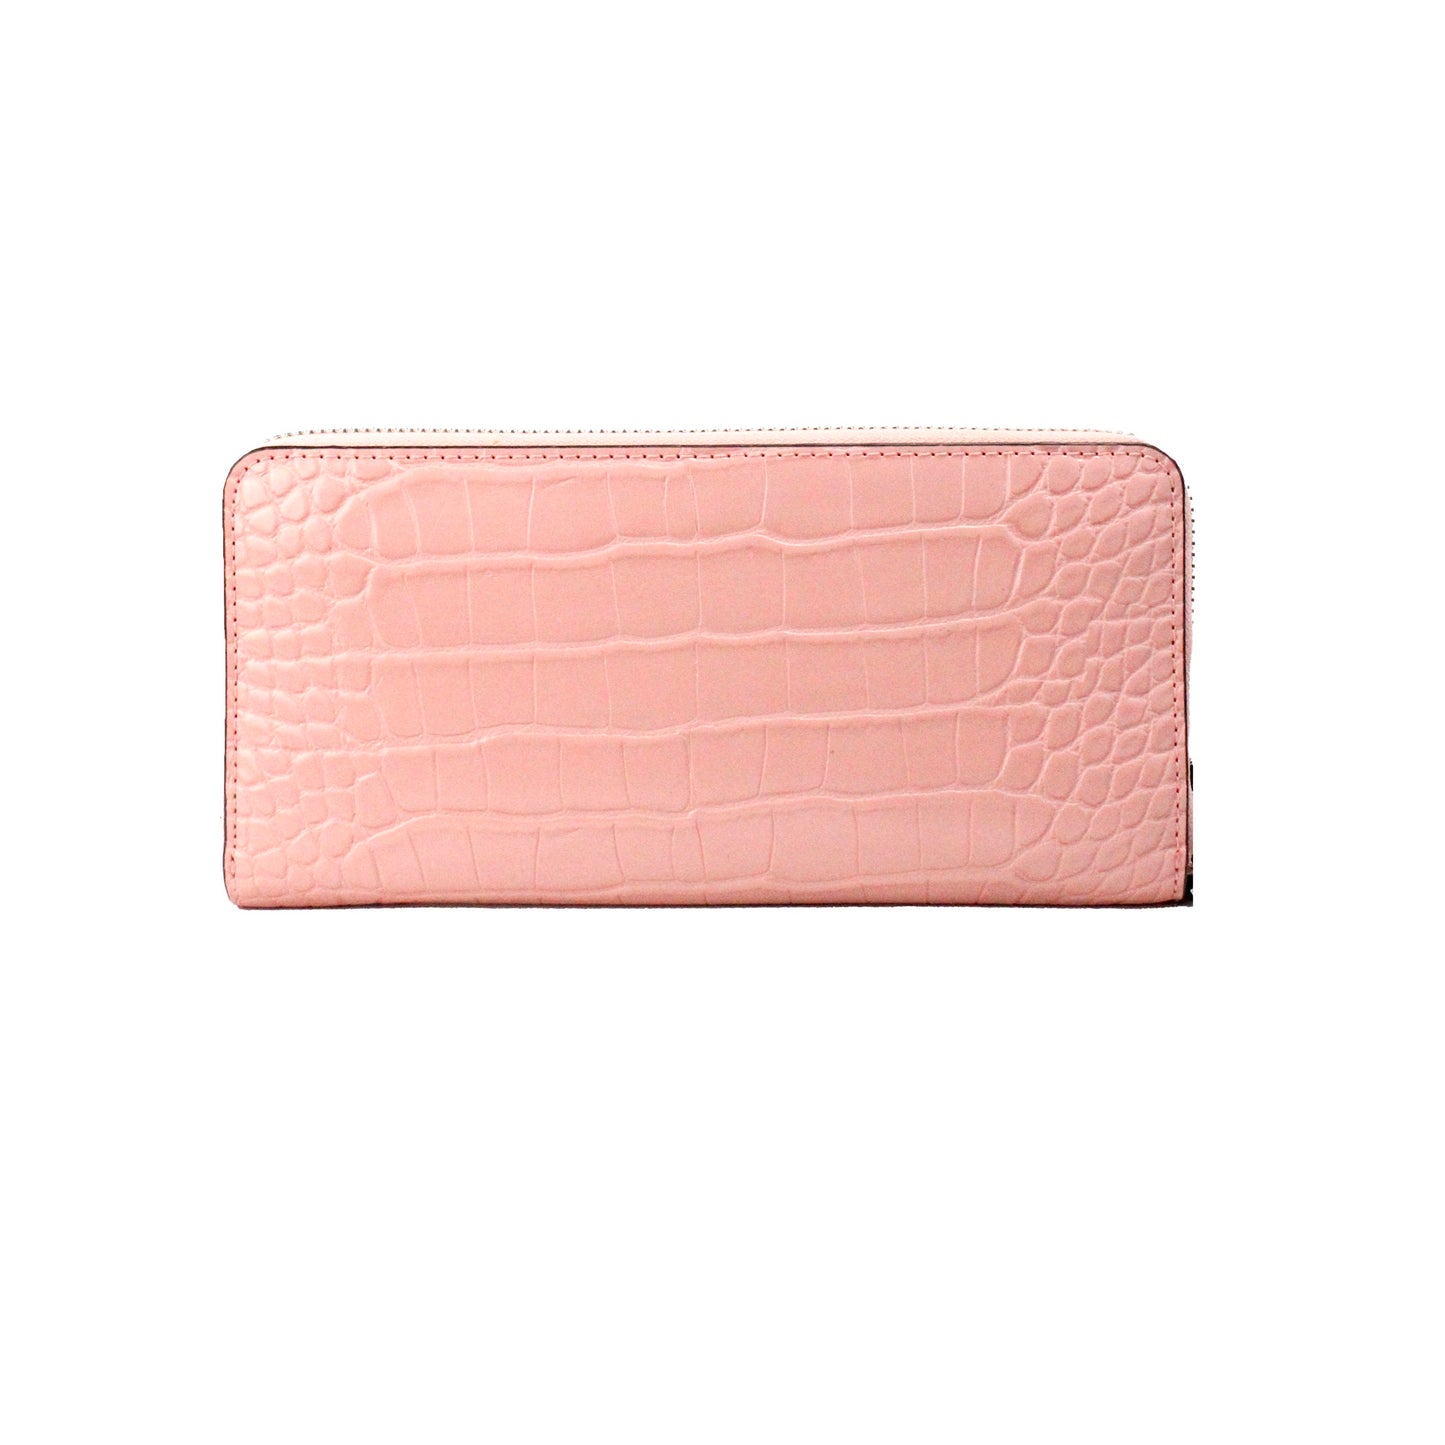 Jet Set Large Pink Animal Print Leather Continental Wrist Wallet